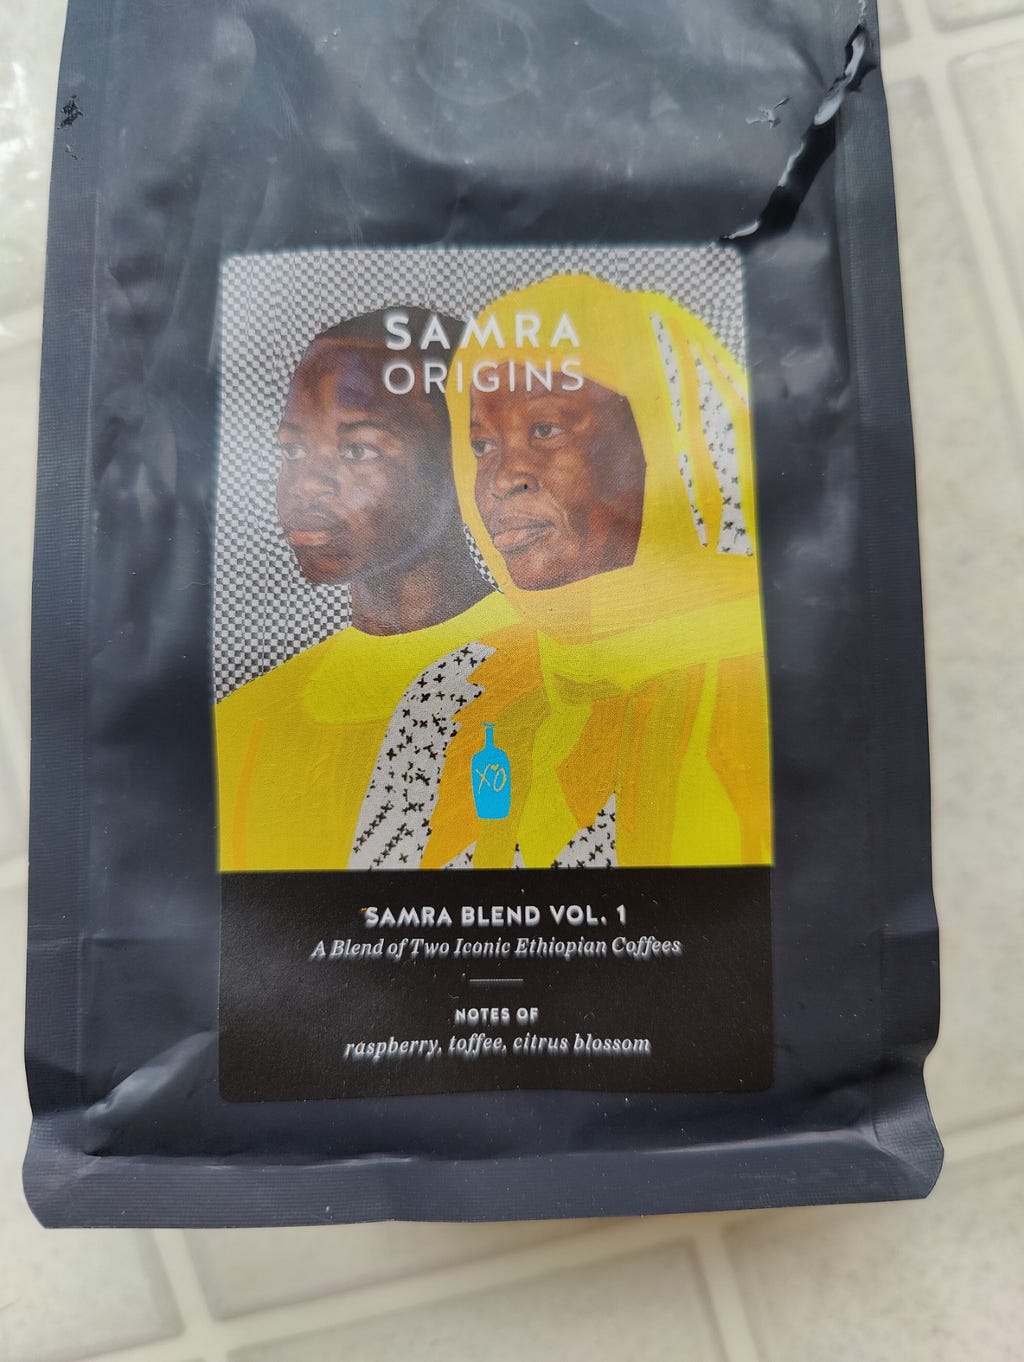 A photo of the Samra Blend Vol. 1 coffee bag.